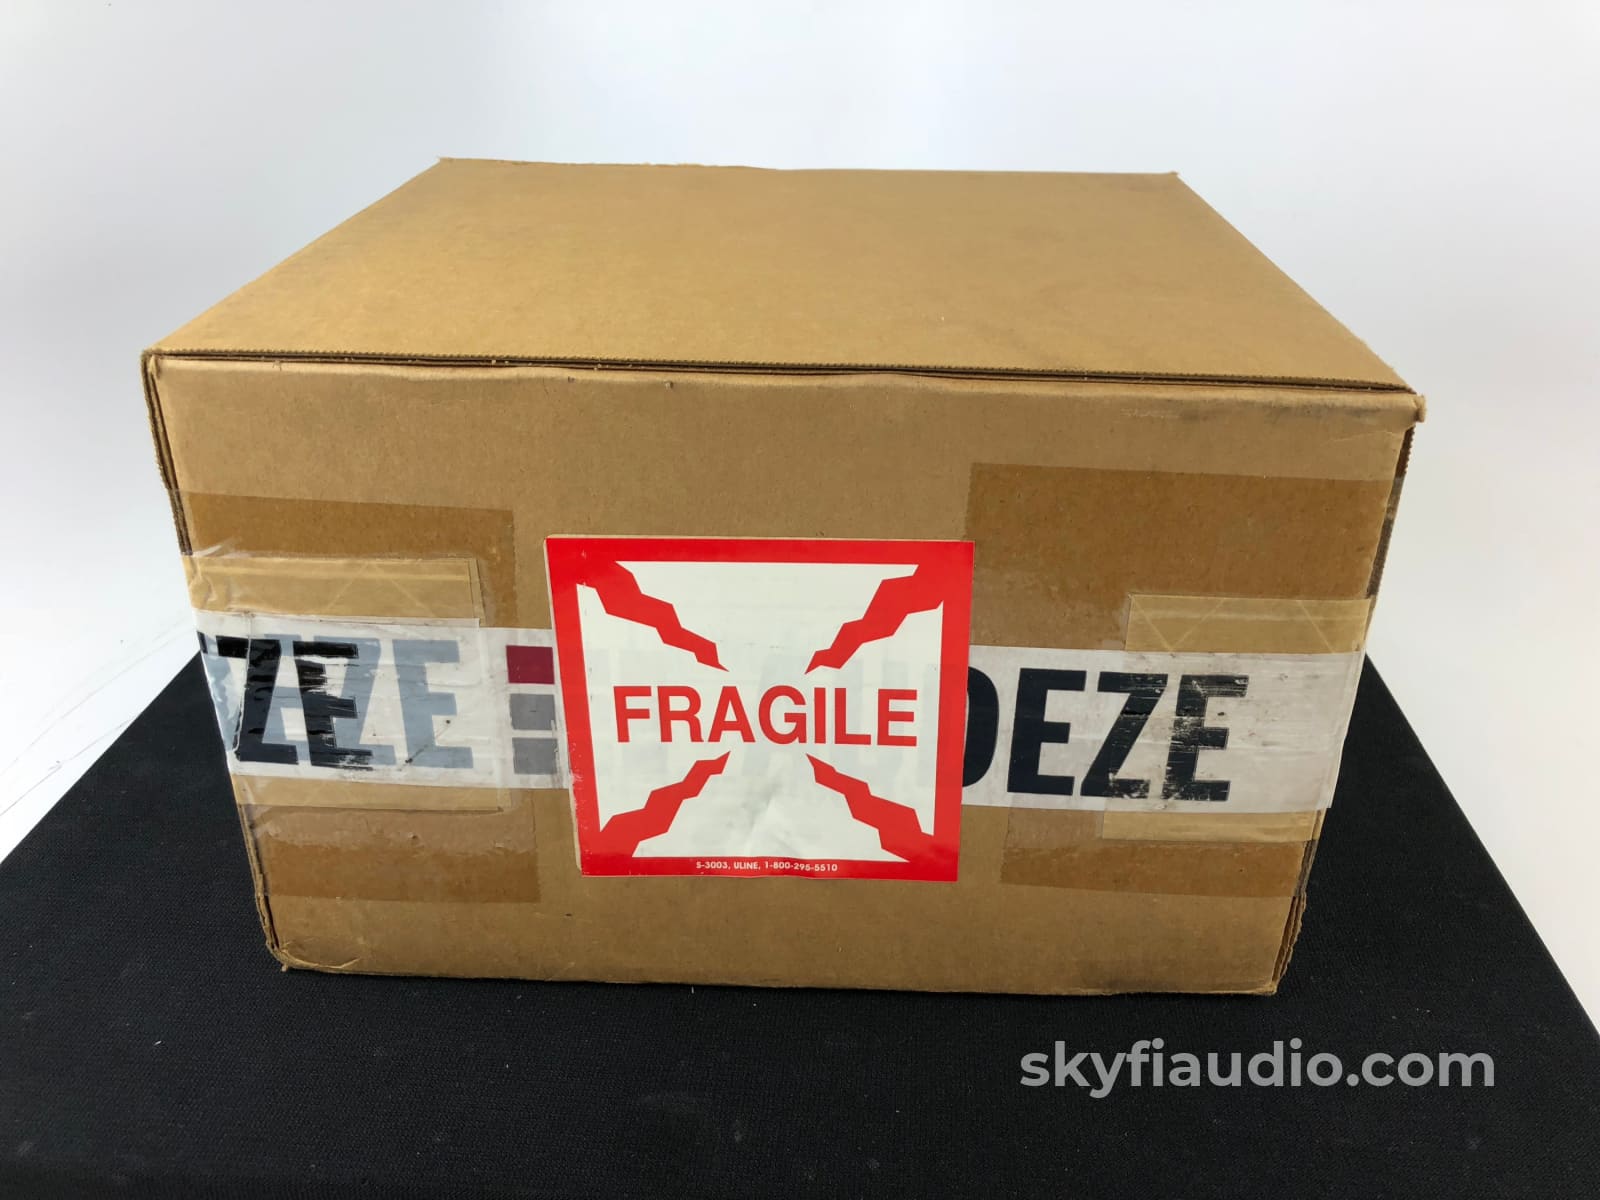 Audeze Lcd-X Headphones - New Sealed In Box Complete